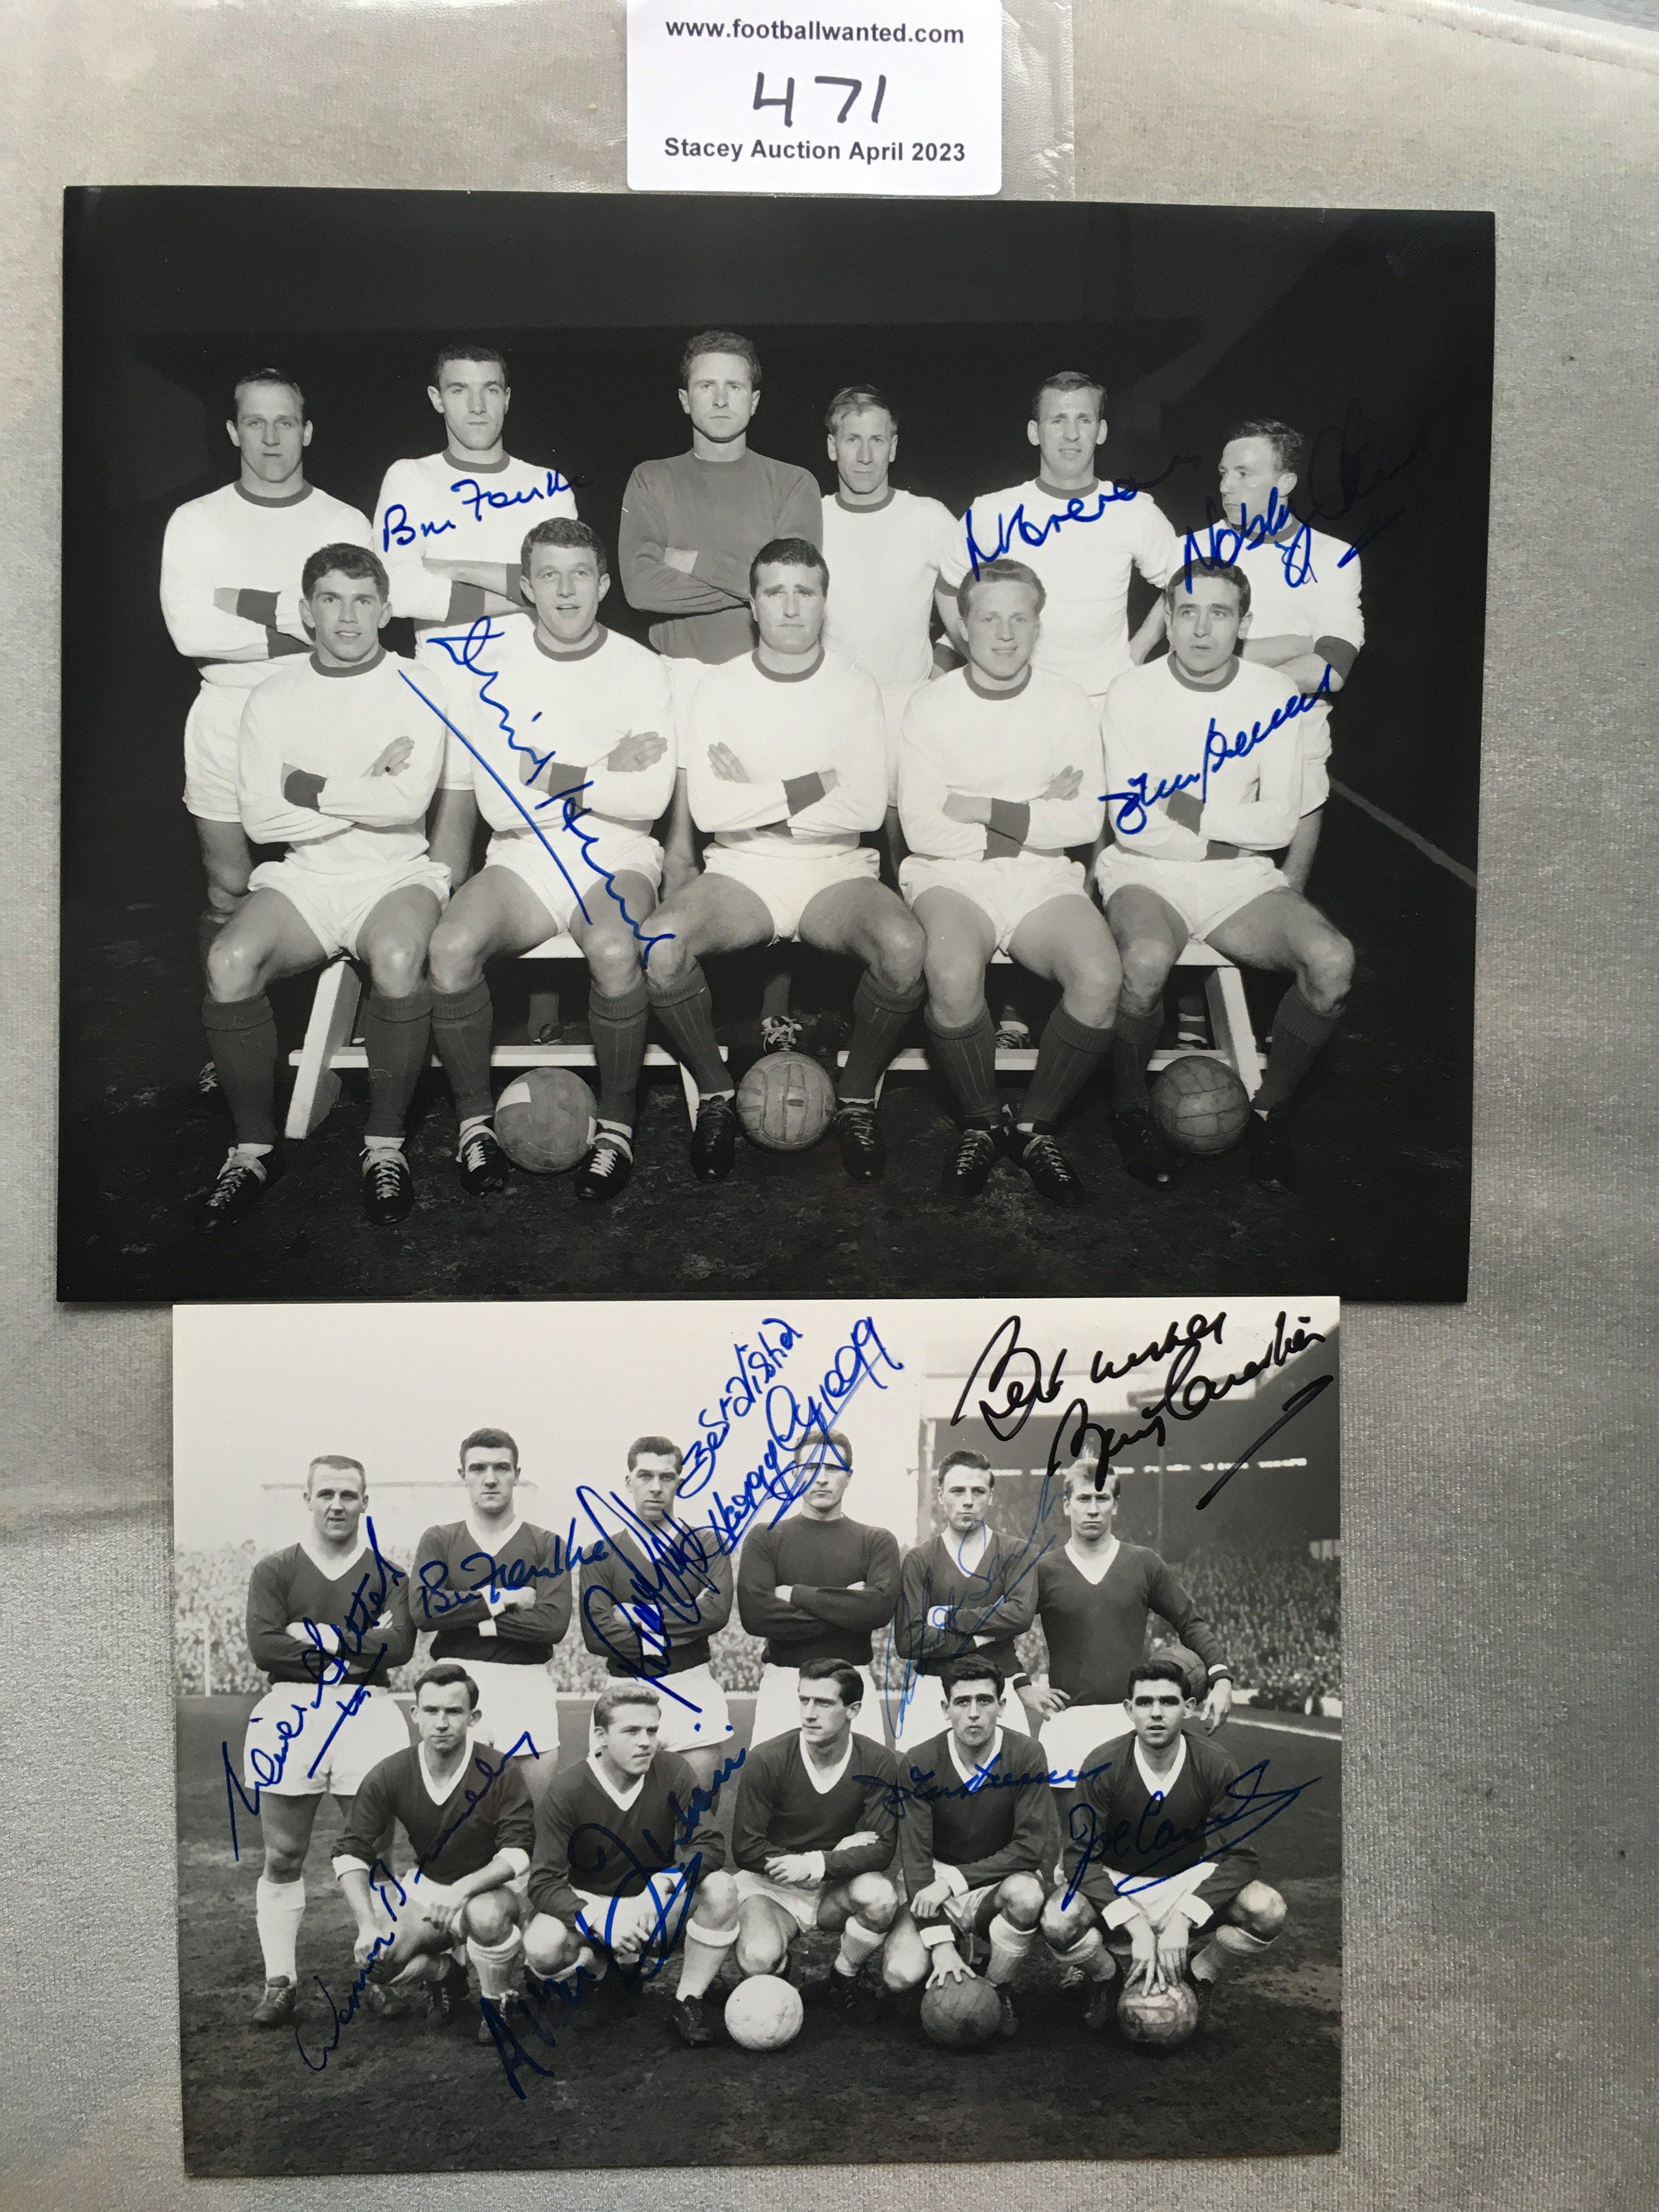 Manchester Signed 1960s Football Team Photos: Genu